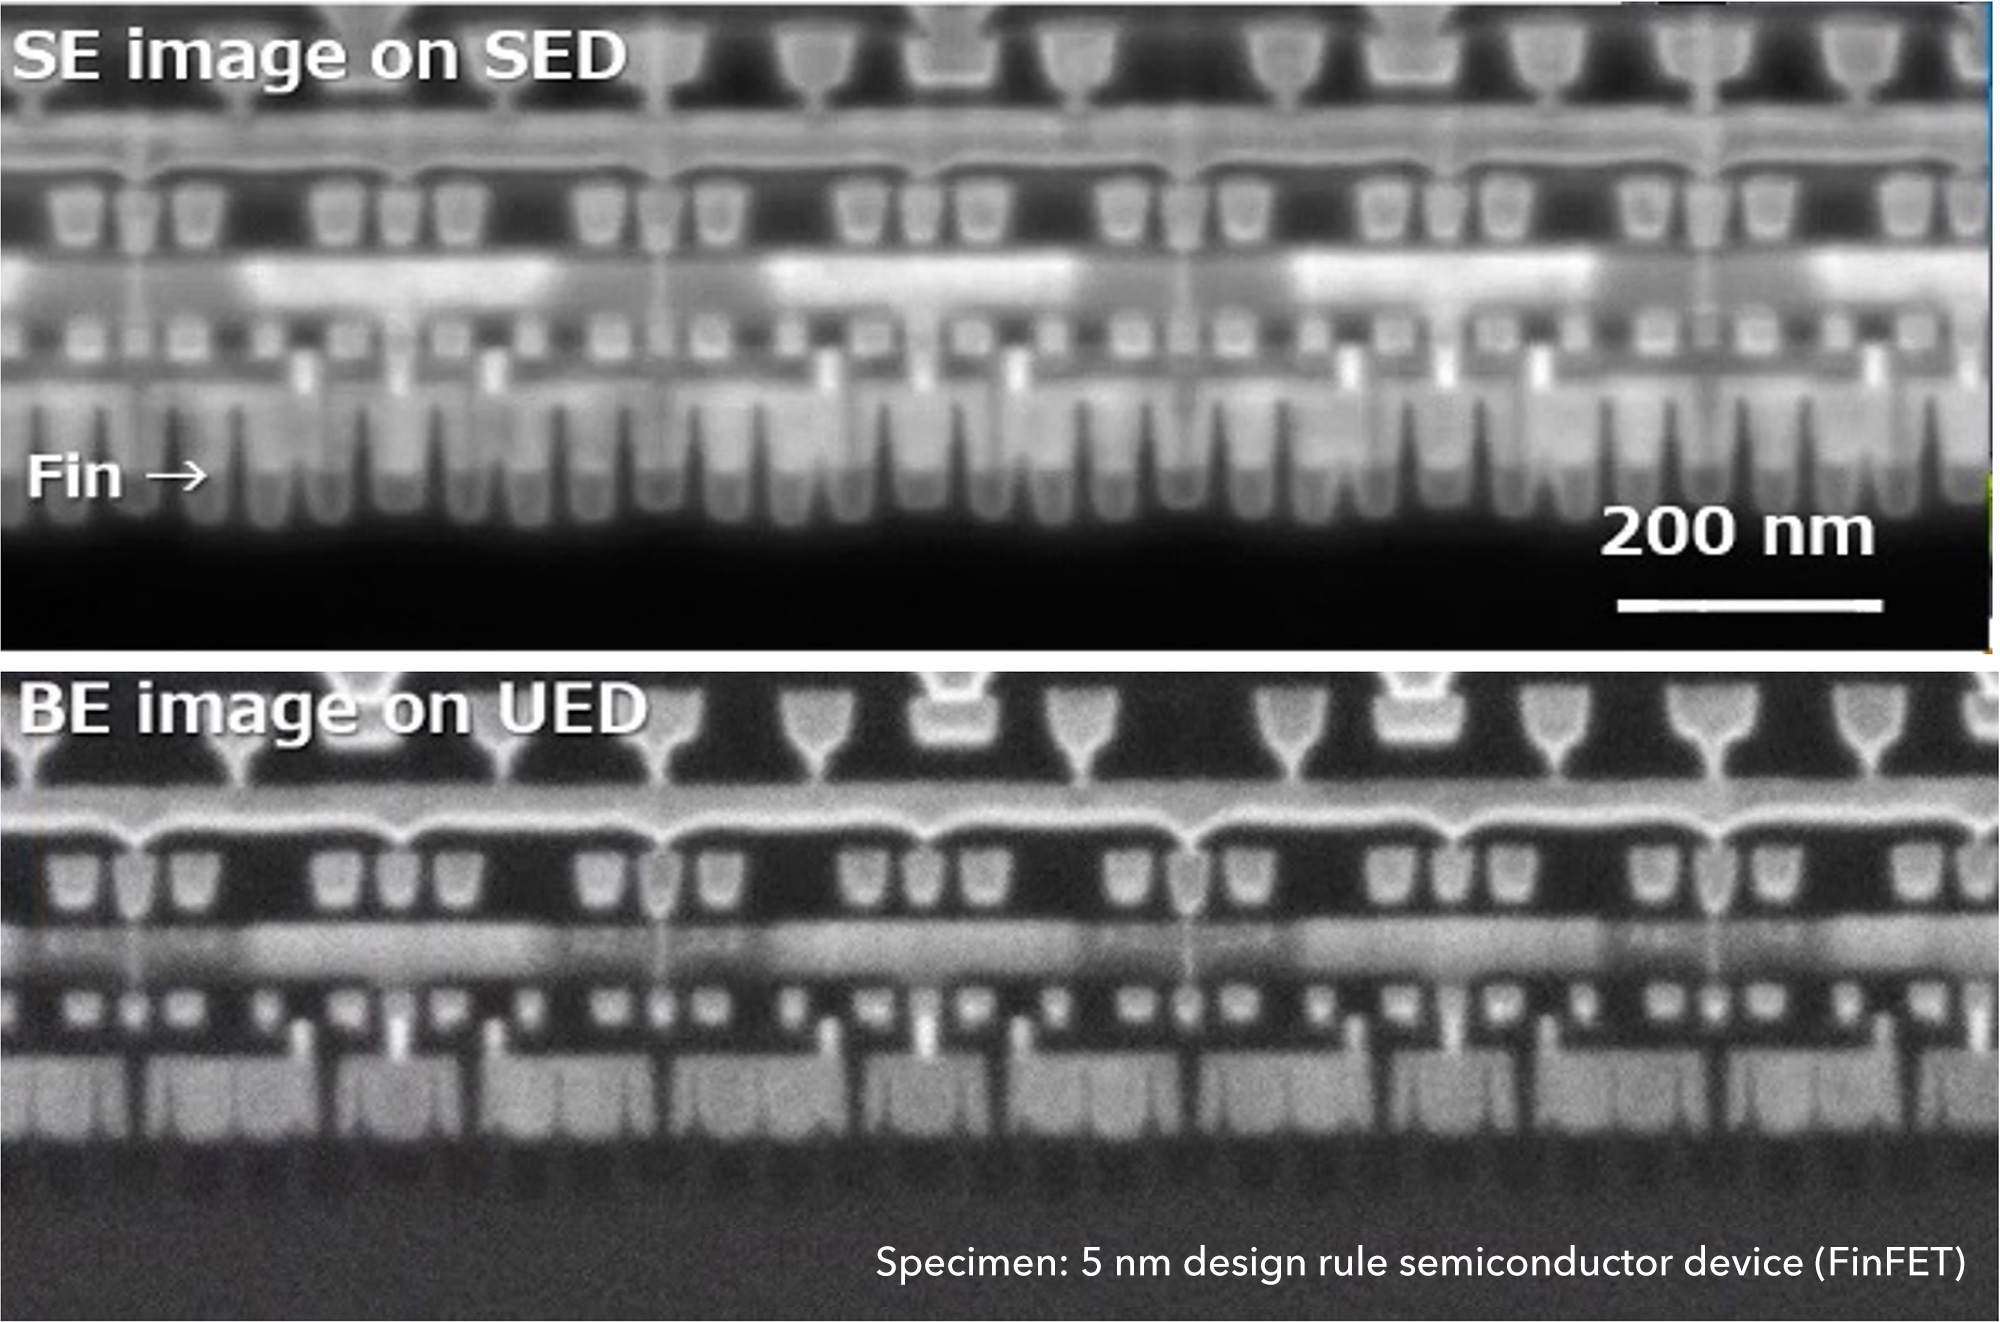 Specimen: 5 nm design rule semiconductor device (FinFET)